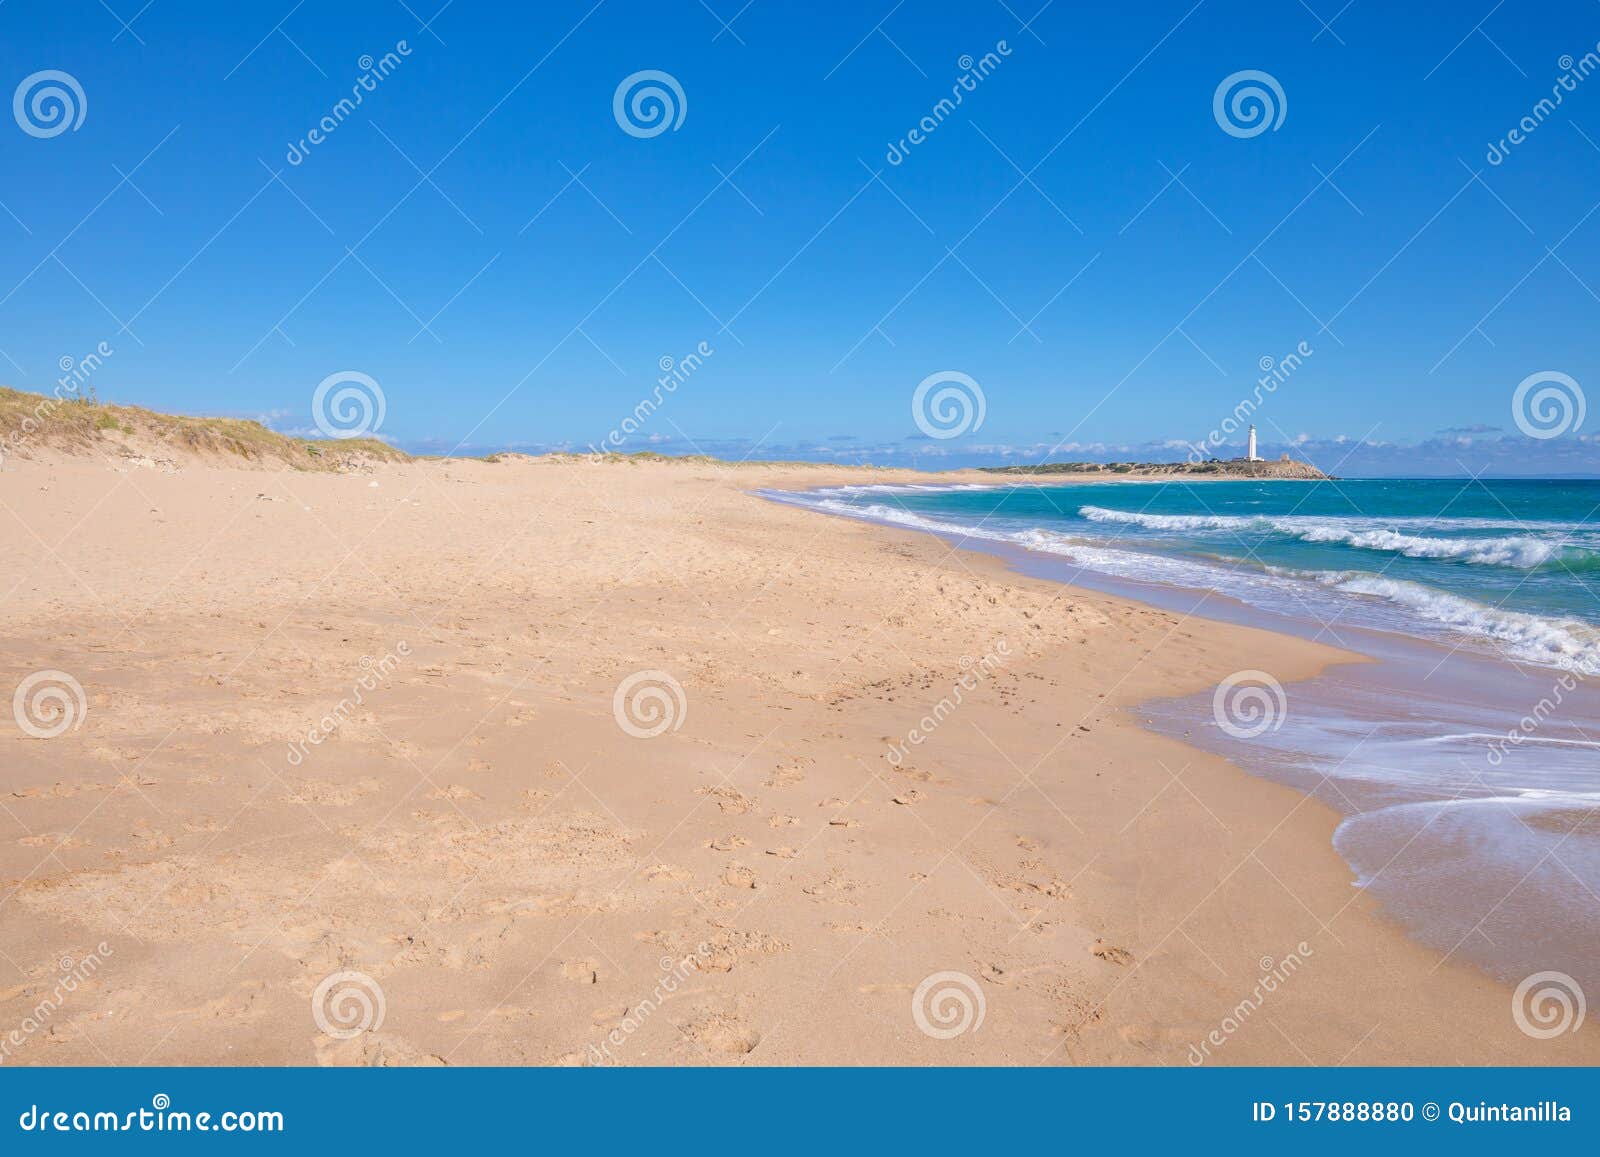 beautiful wild beaches of zahora and cala isabel in cadiz